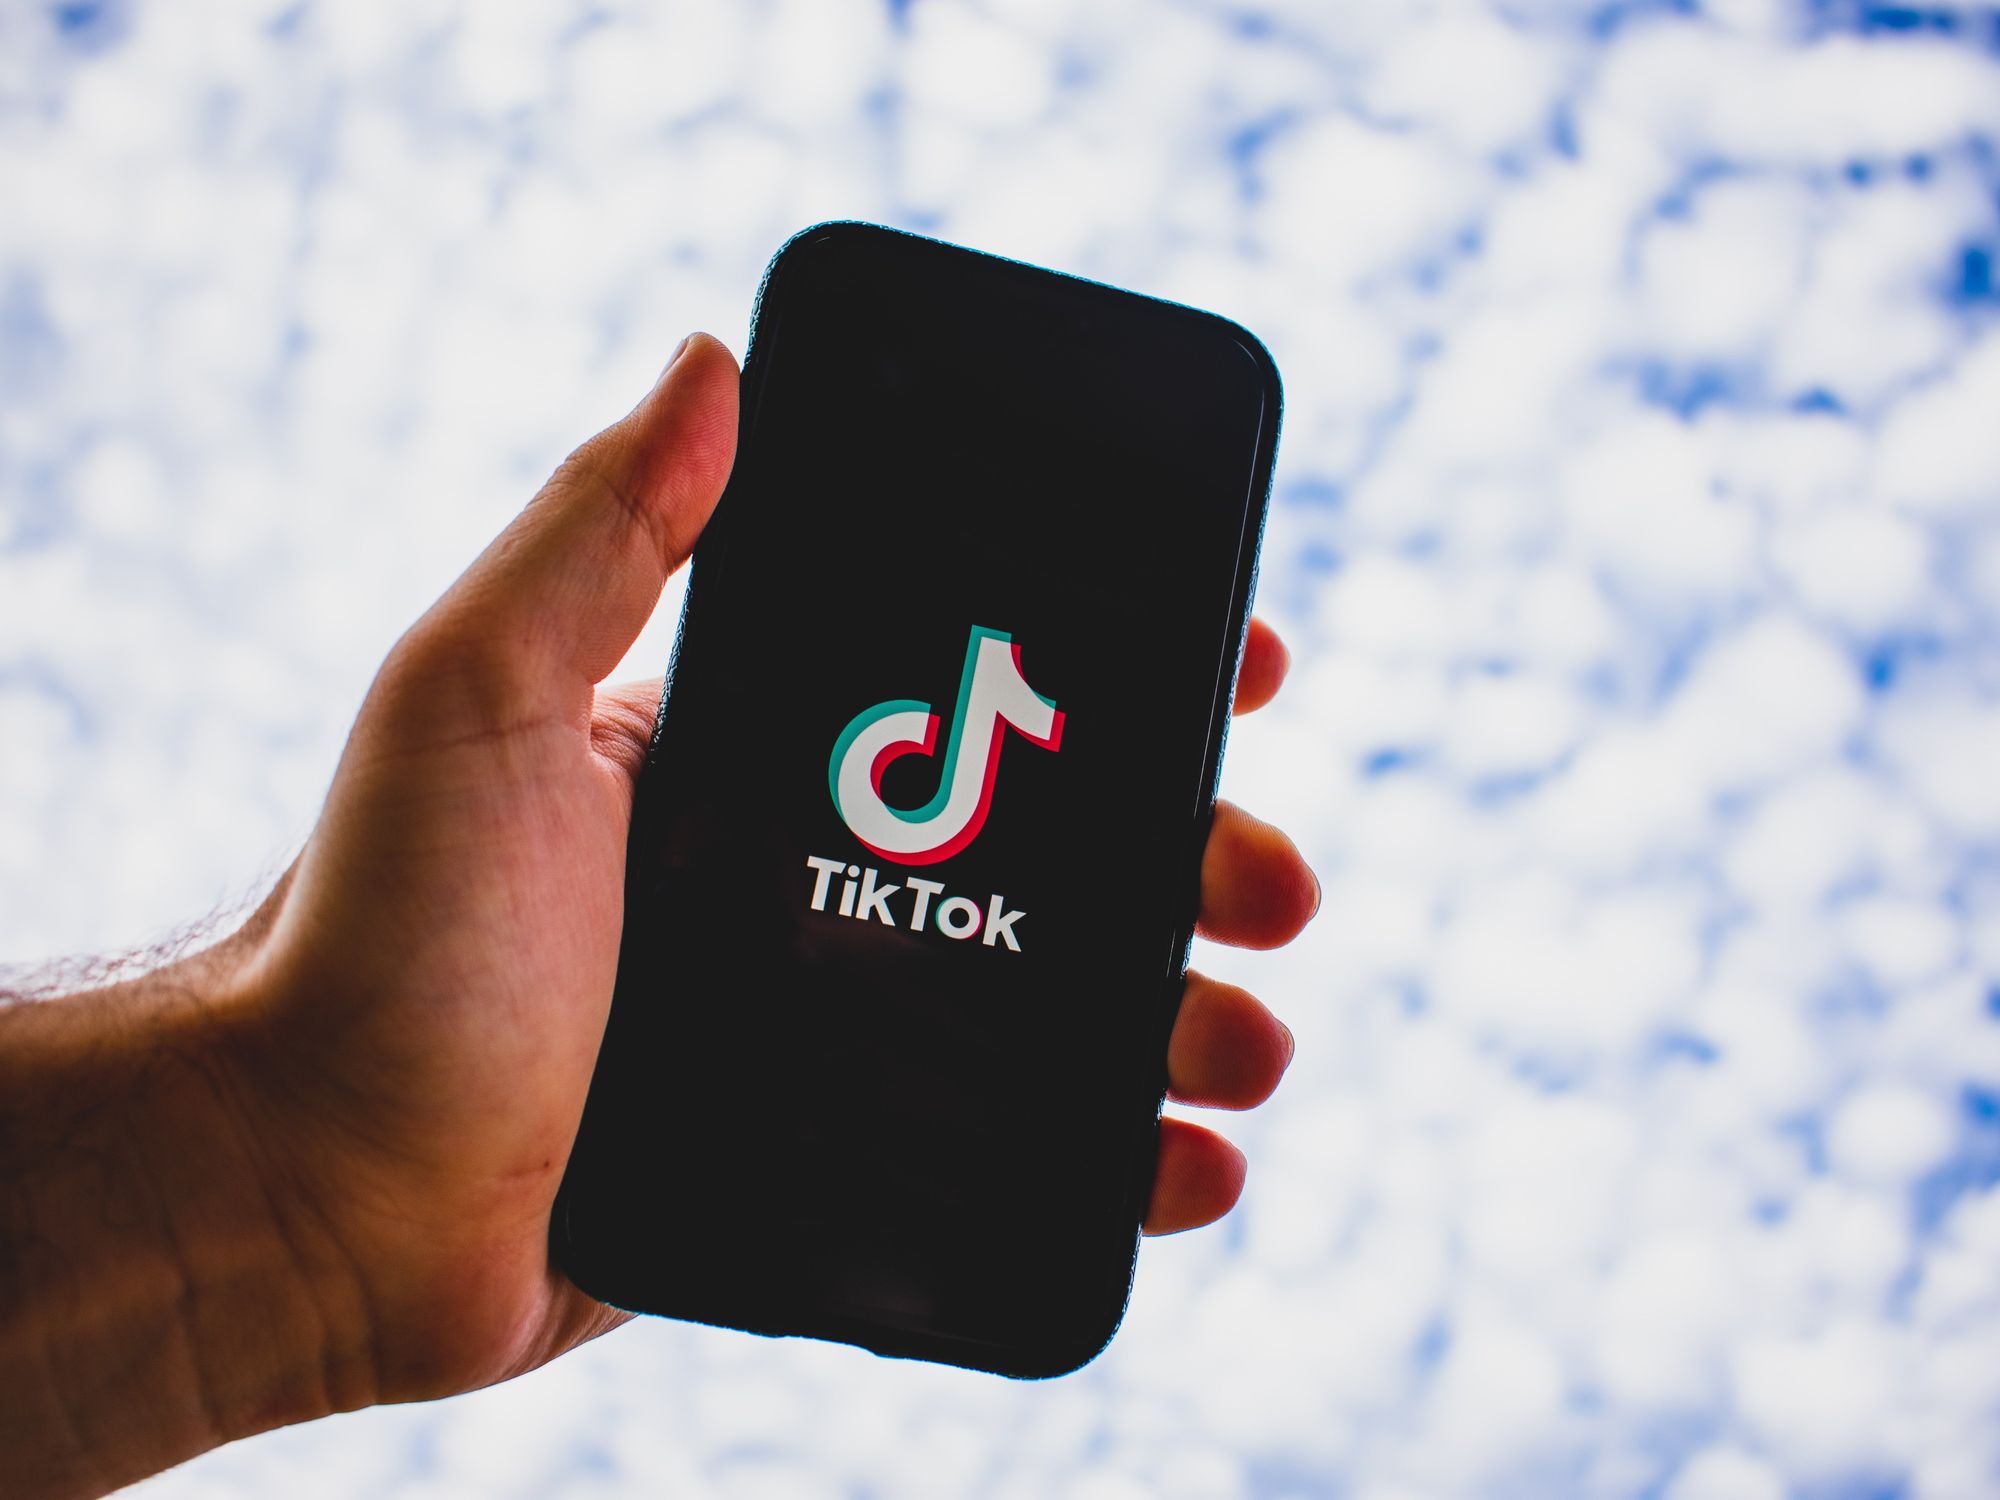 Amazon Tells Employees to Delete TikTok, Then Claims Directive Was Sent in Error